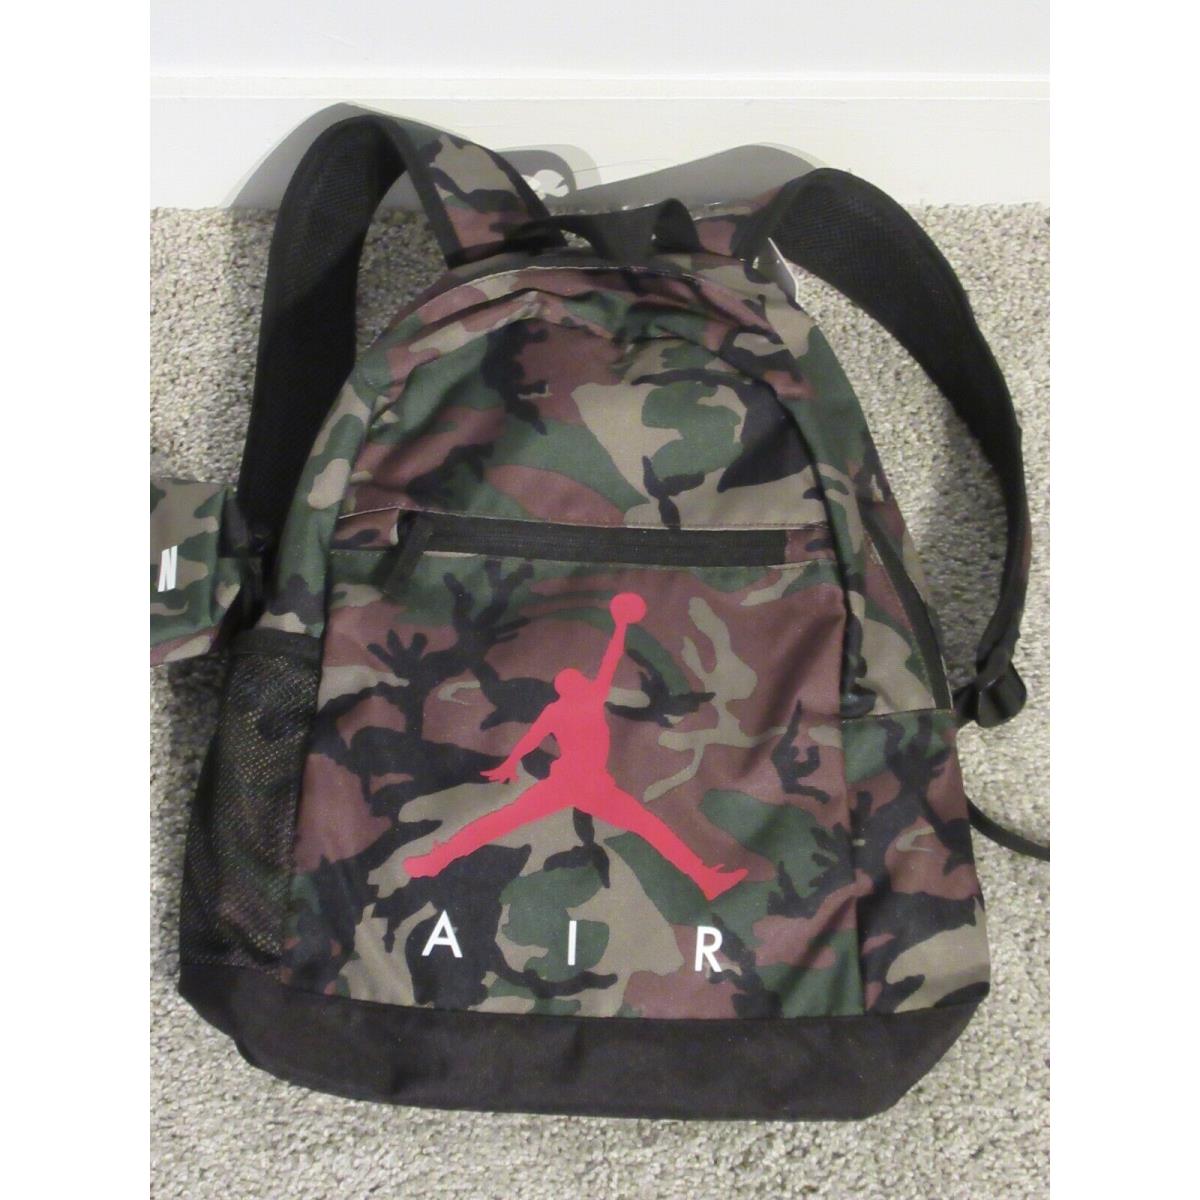 Nike Air Jordan Jumpman Camo Backpack Bag w/ Matching Pouch Case